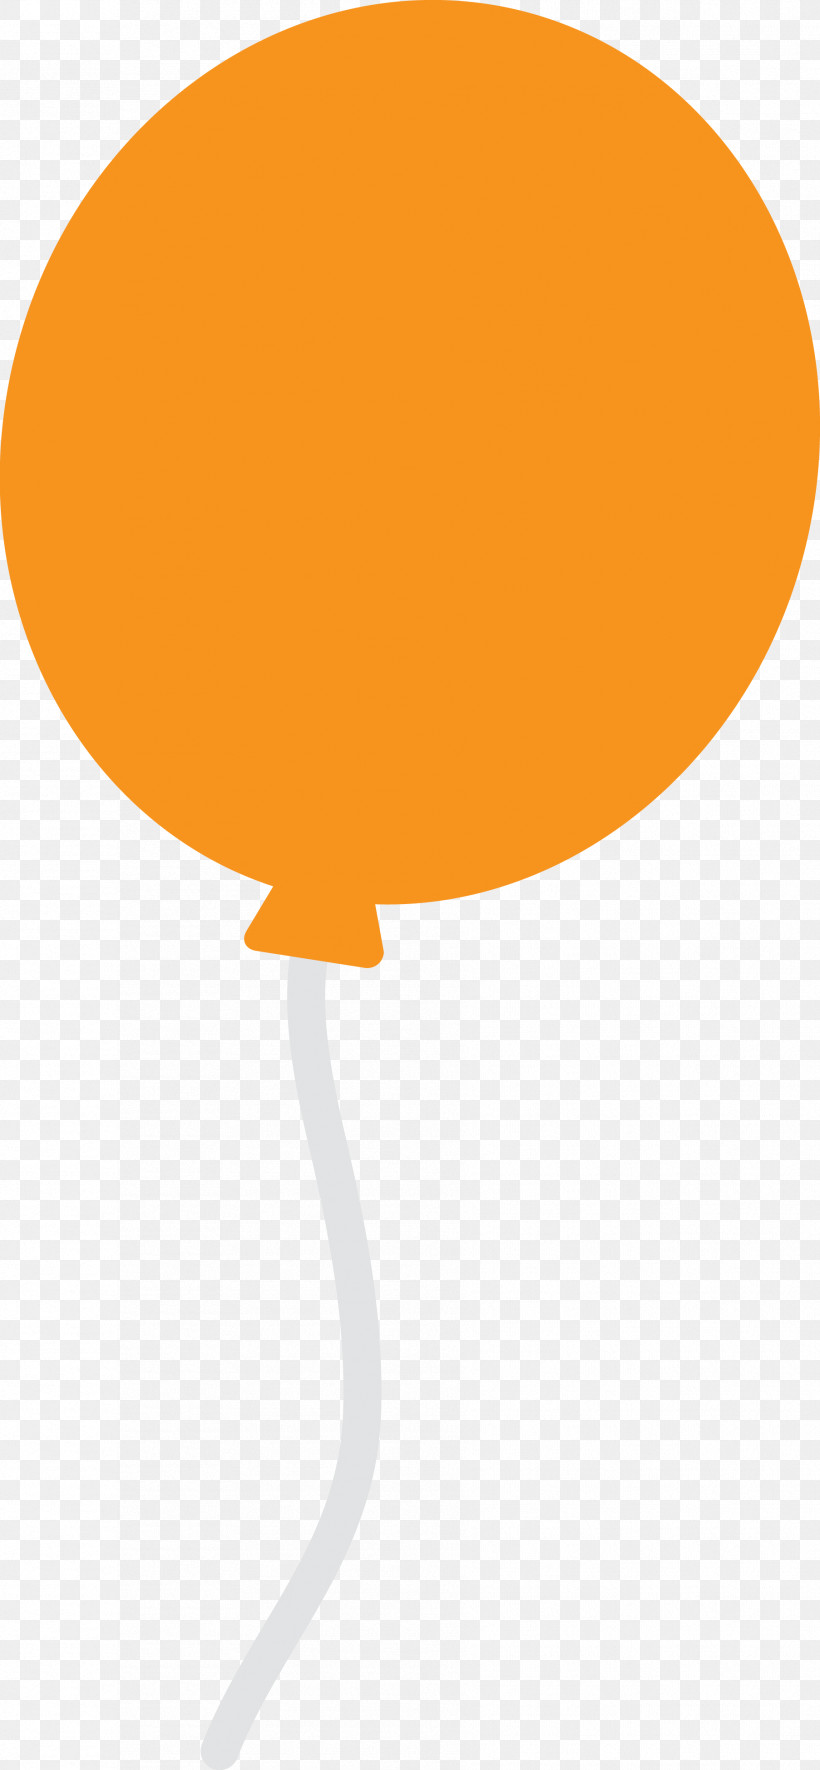 Balloon, PNG, 1806x3900px, Balloon, Orange, Yellow Download Free